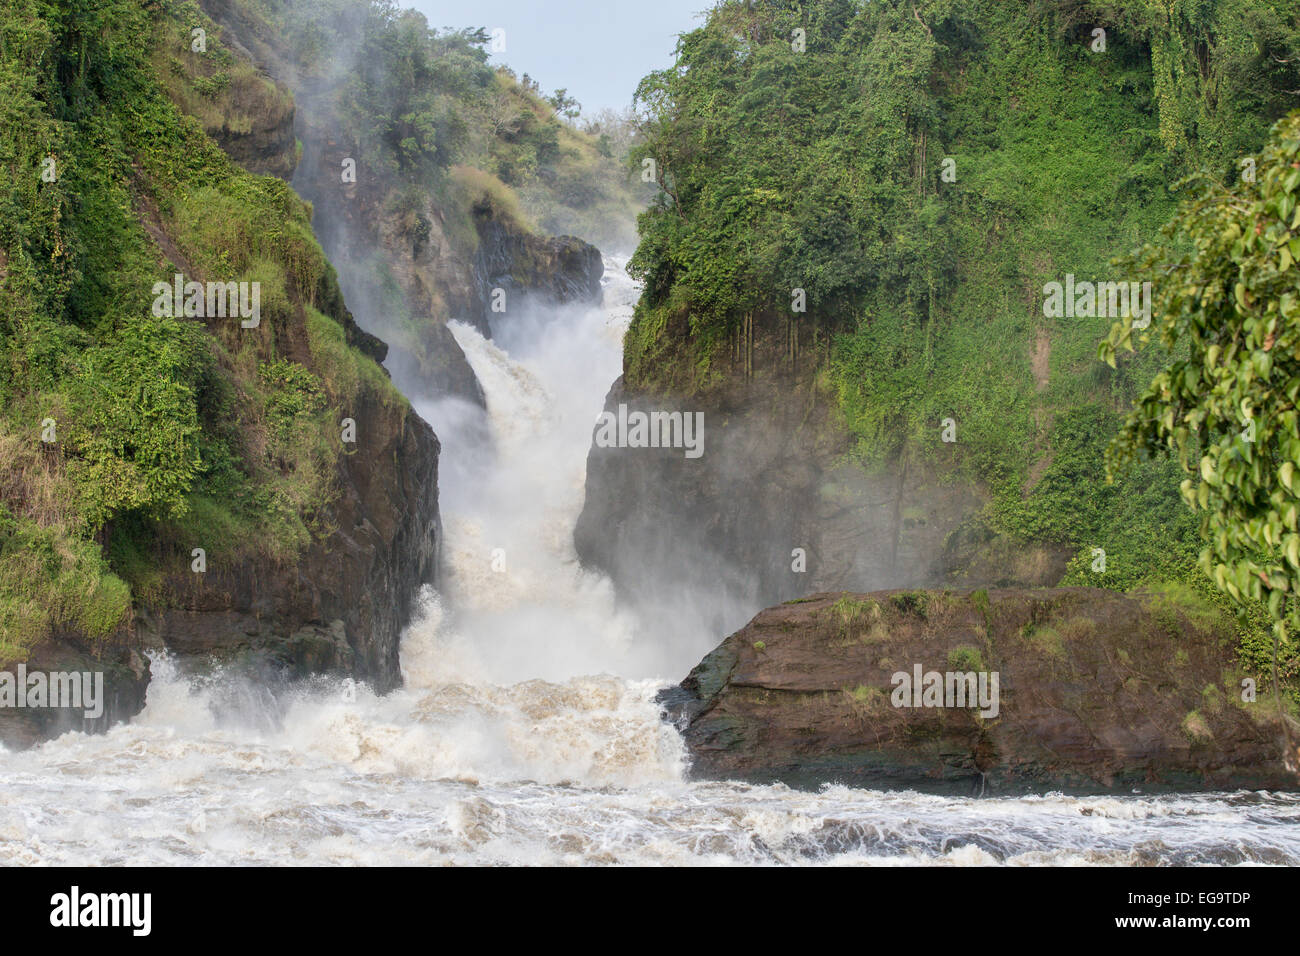 A view of the Murchinson Falls at Murchinson Falls National Park, Uganda Stock Photo